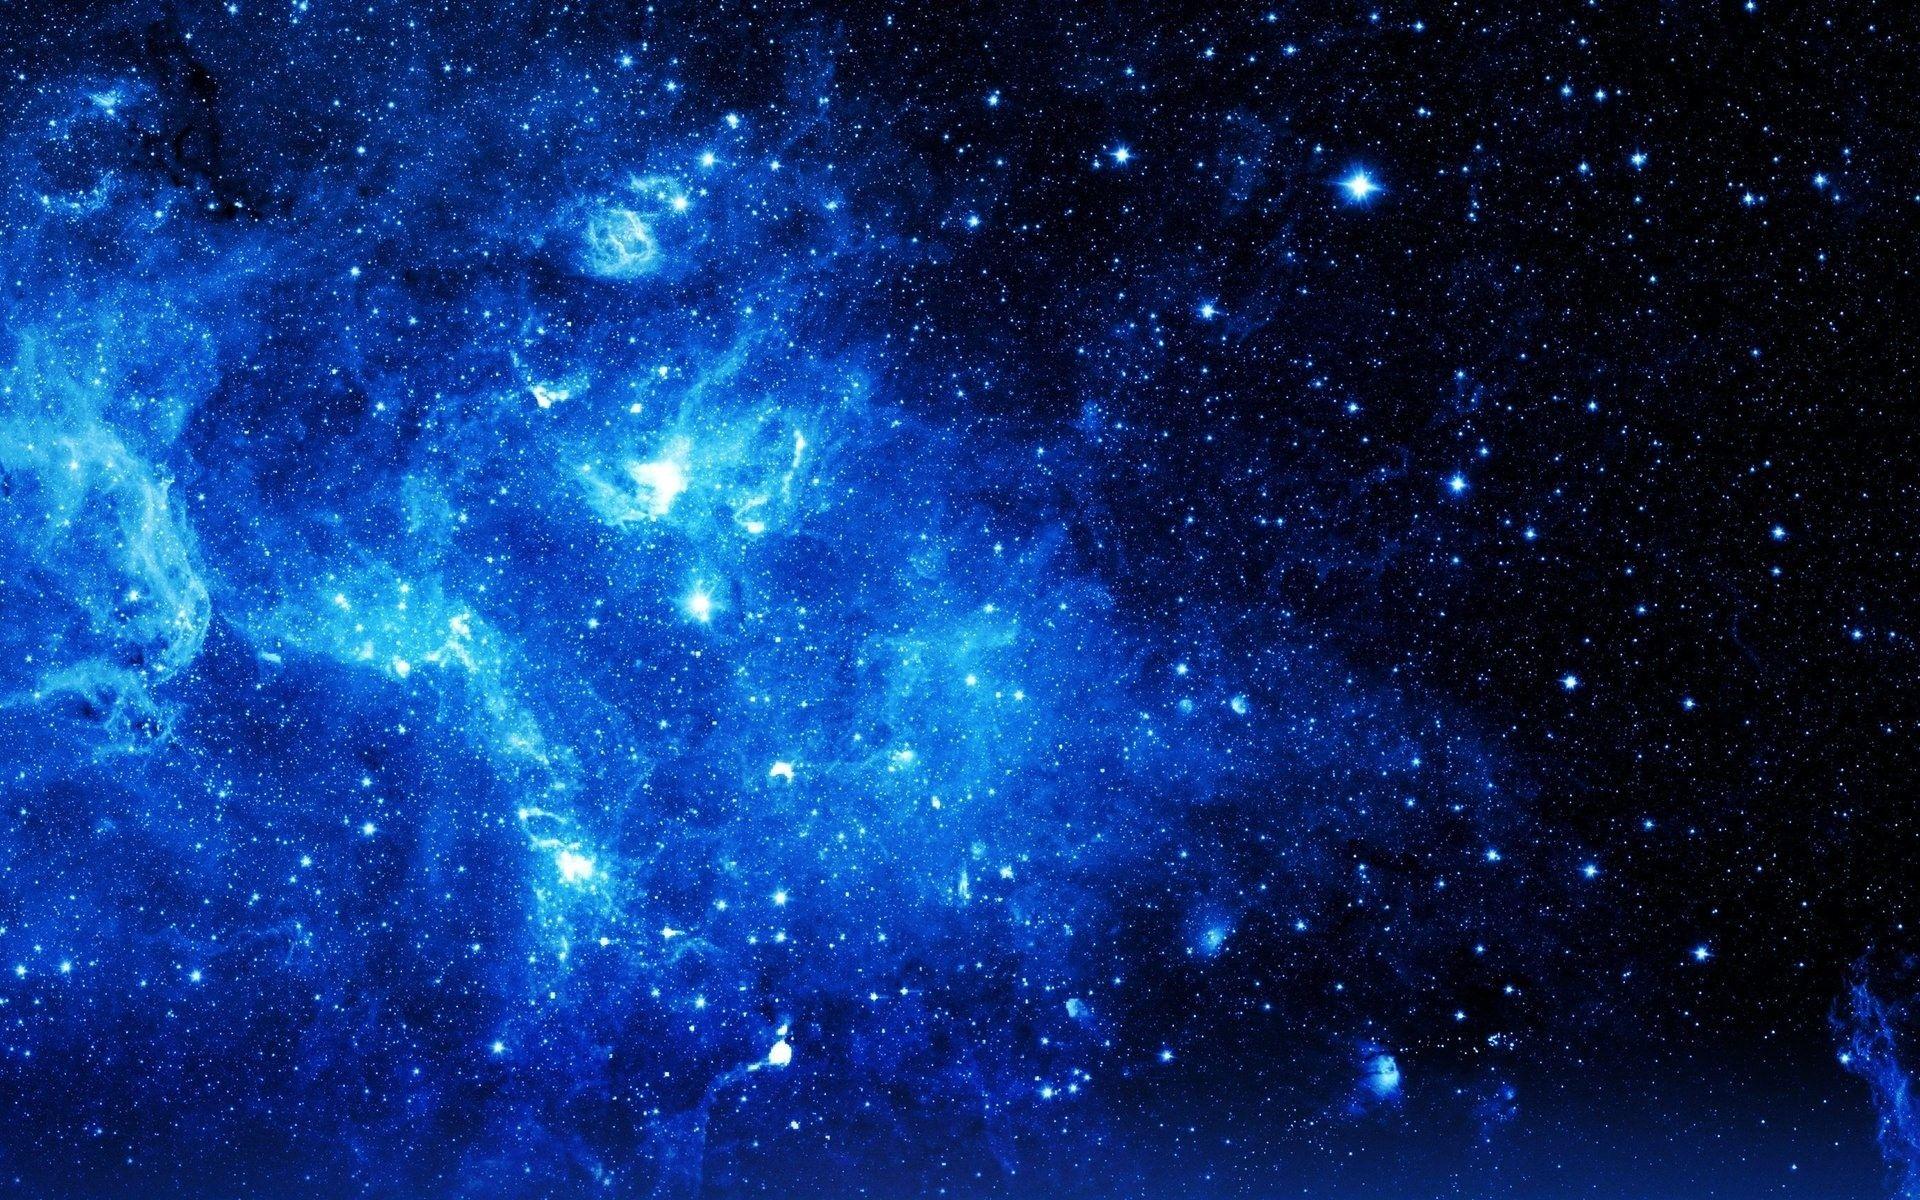 Wallpaper.wiki Nebula Stars In Universe Space Image PIC WPD00403